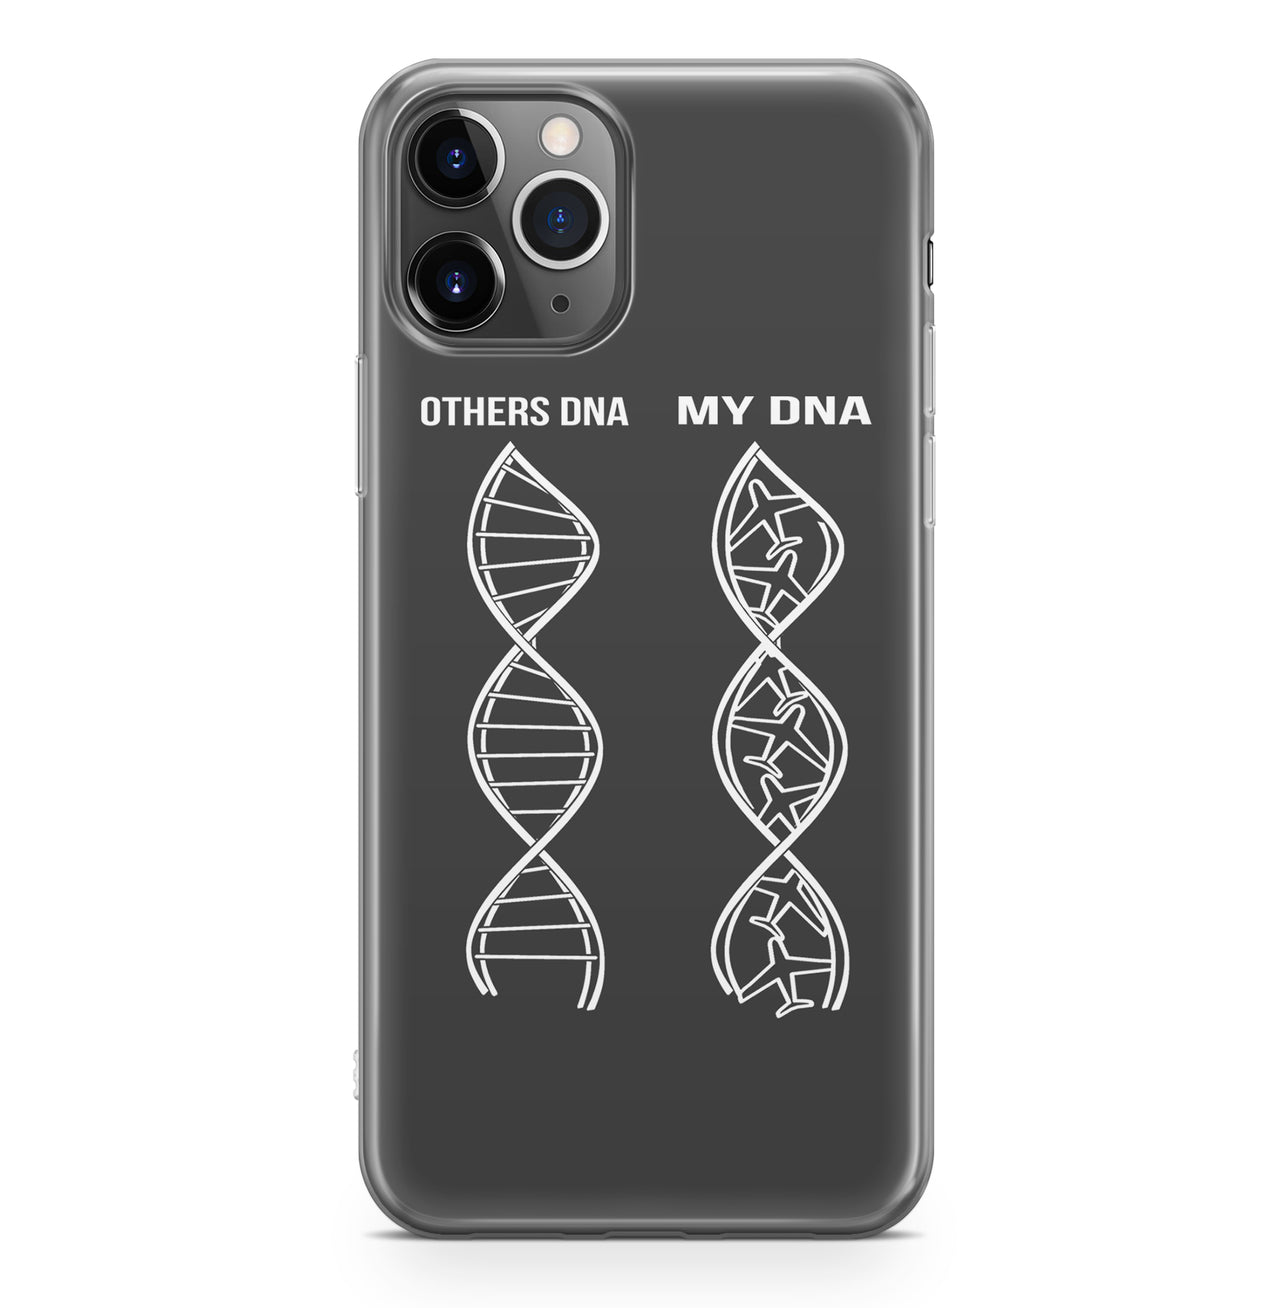 Aviation DNA Designed iPhone Cases